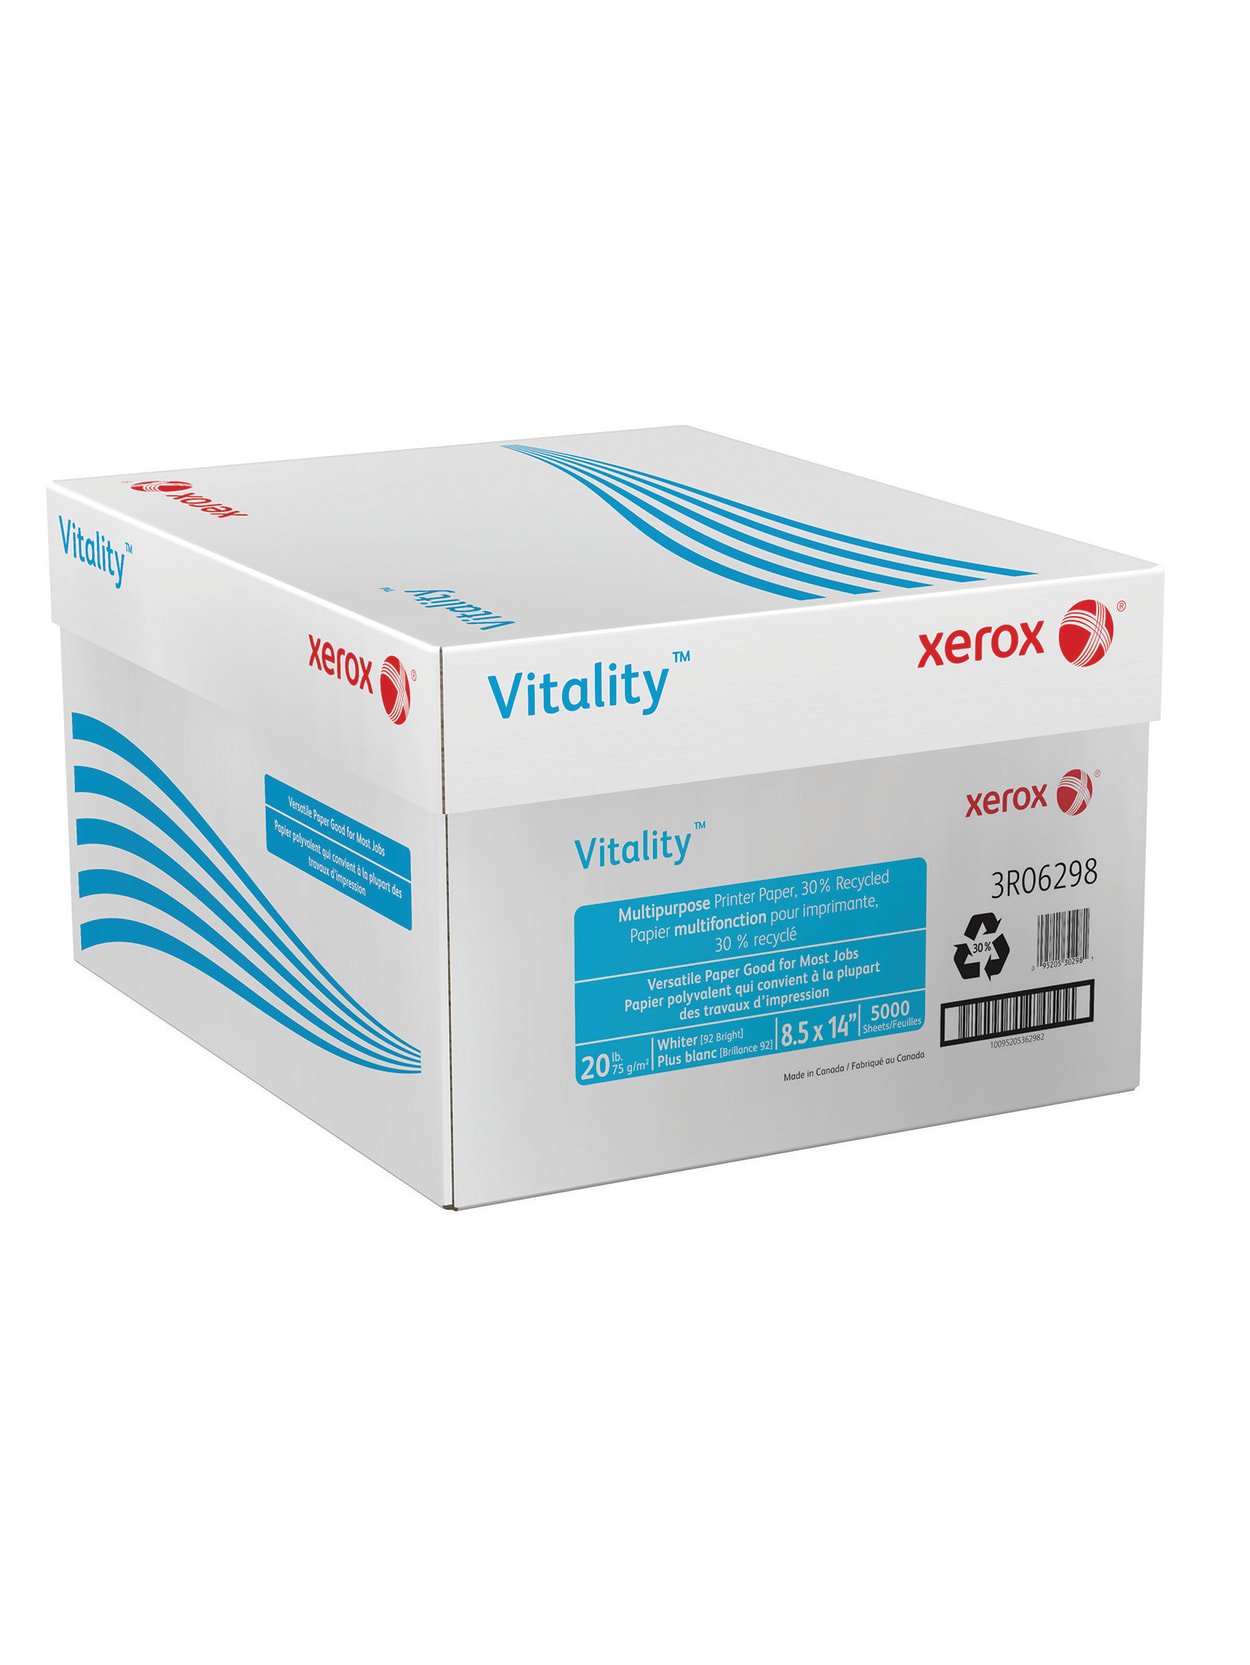 Xerox Vitality Multi Use Printer Paper Legal Size 8 12 X 14 92